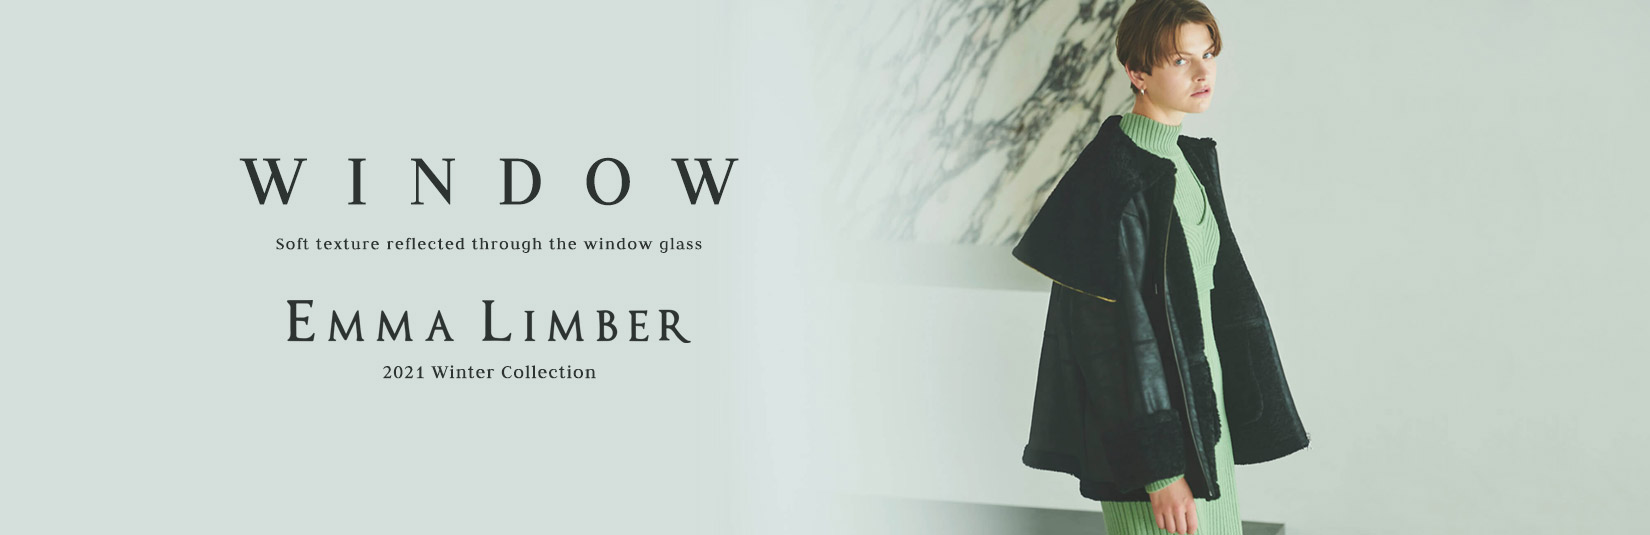 EMMA LIMBER 2021Winter Collection -WINDOW-